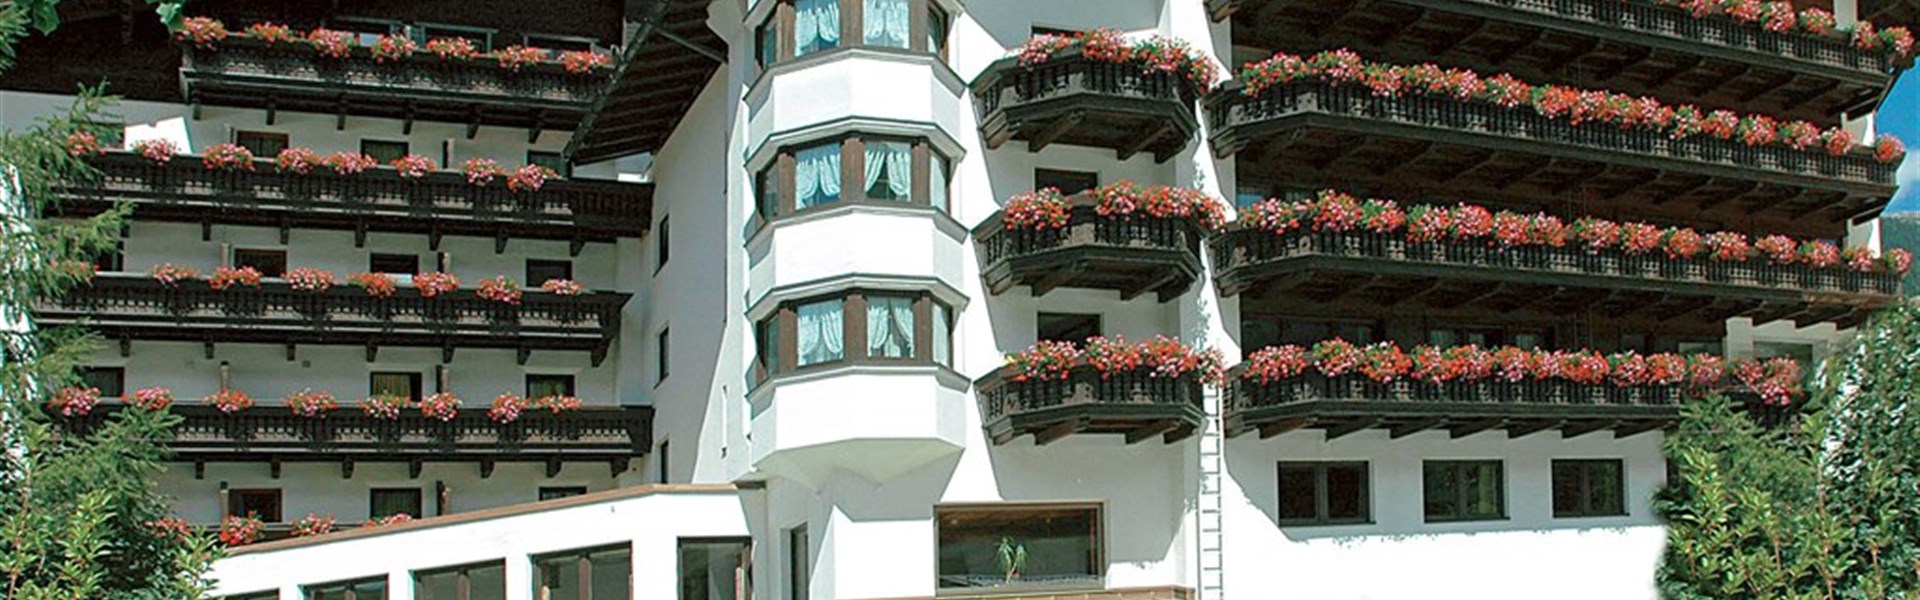 Marco Polo - Hotel Arlberg (S) - 